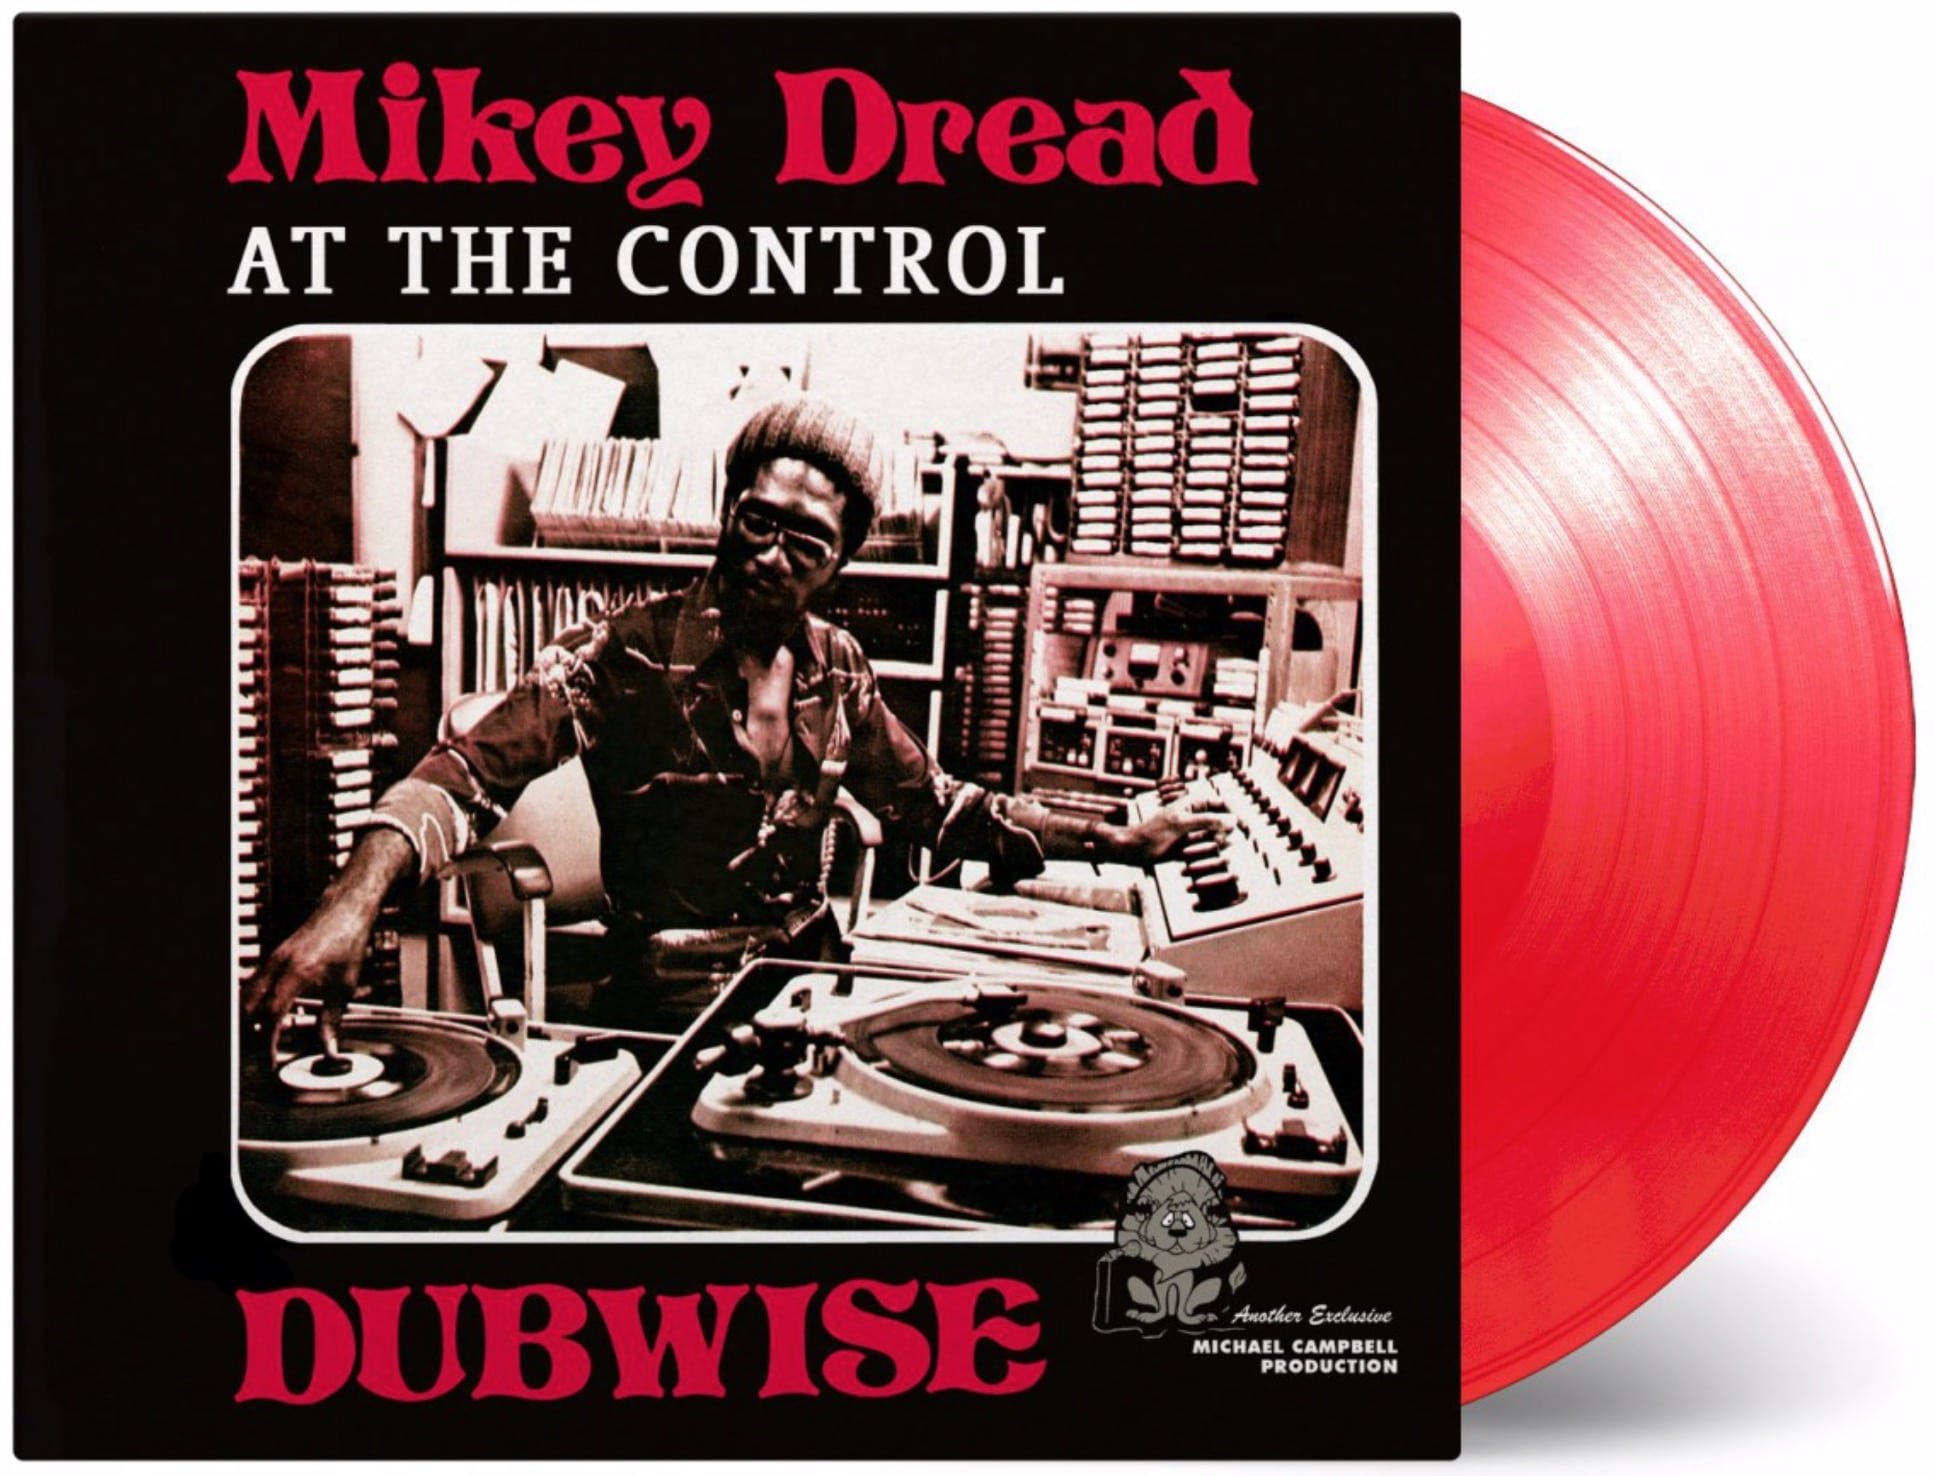 Mikey Dread: Down & Dubwise